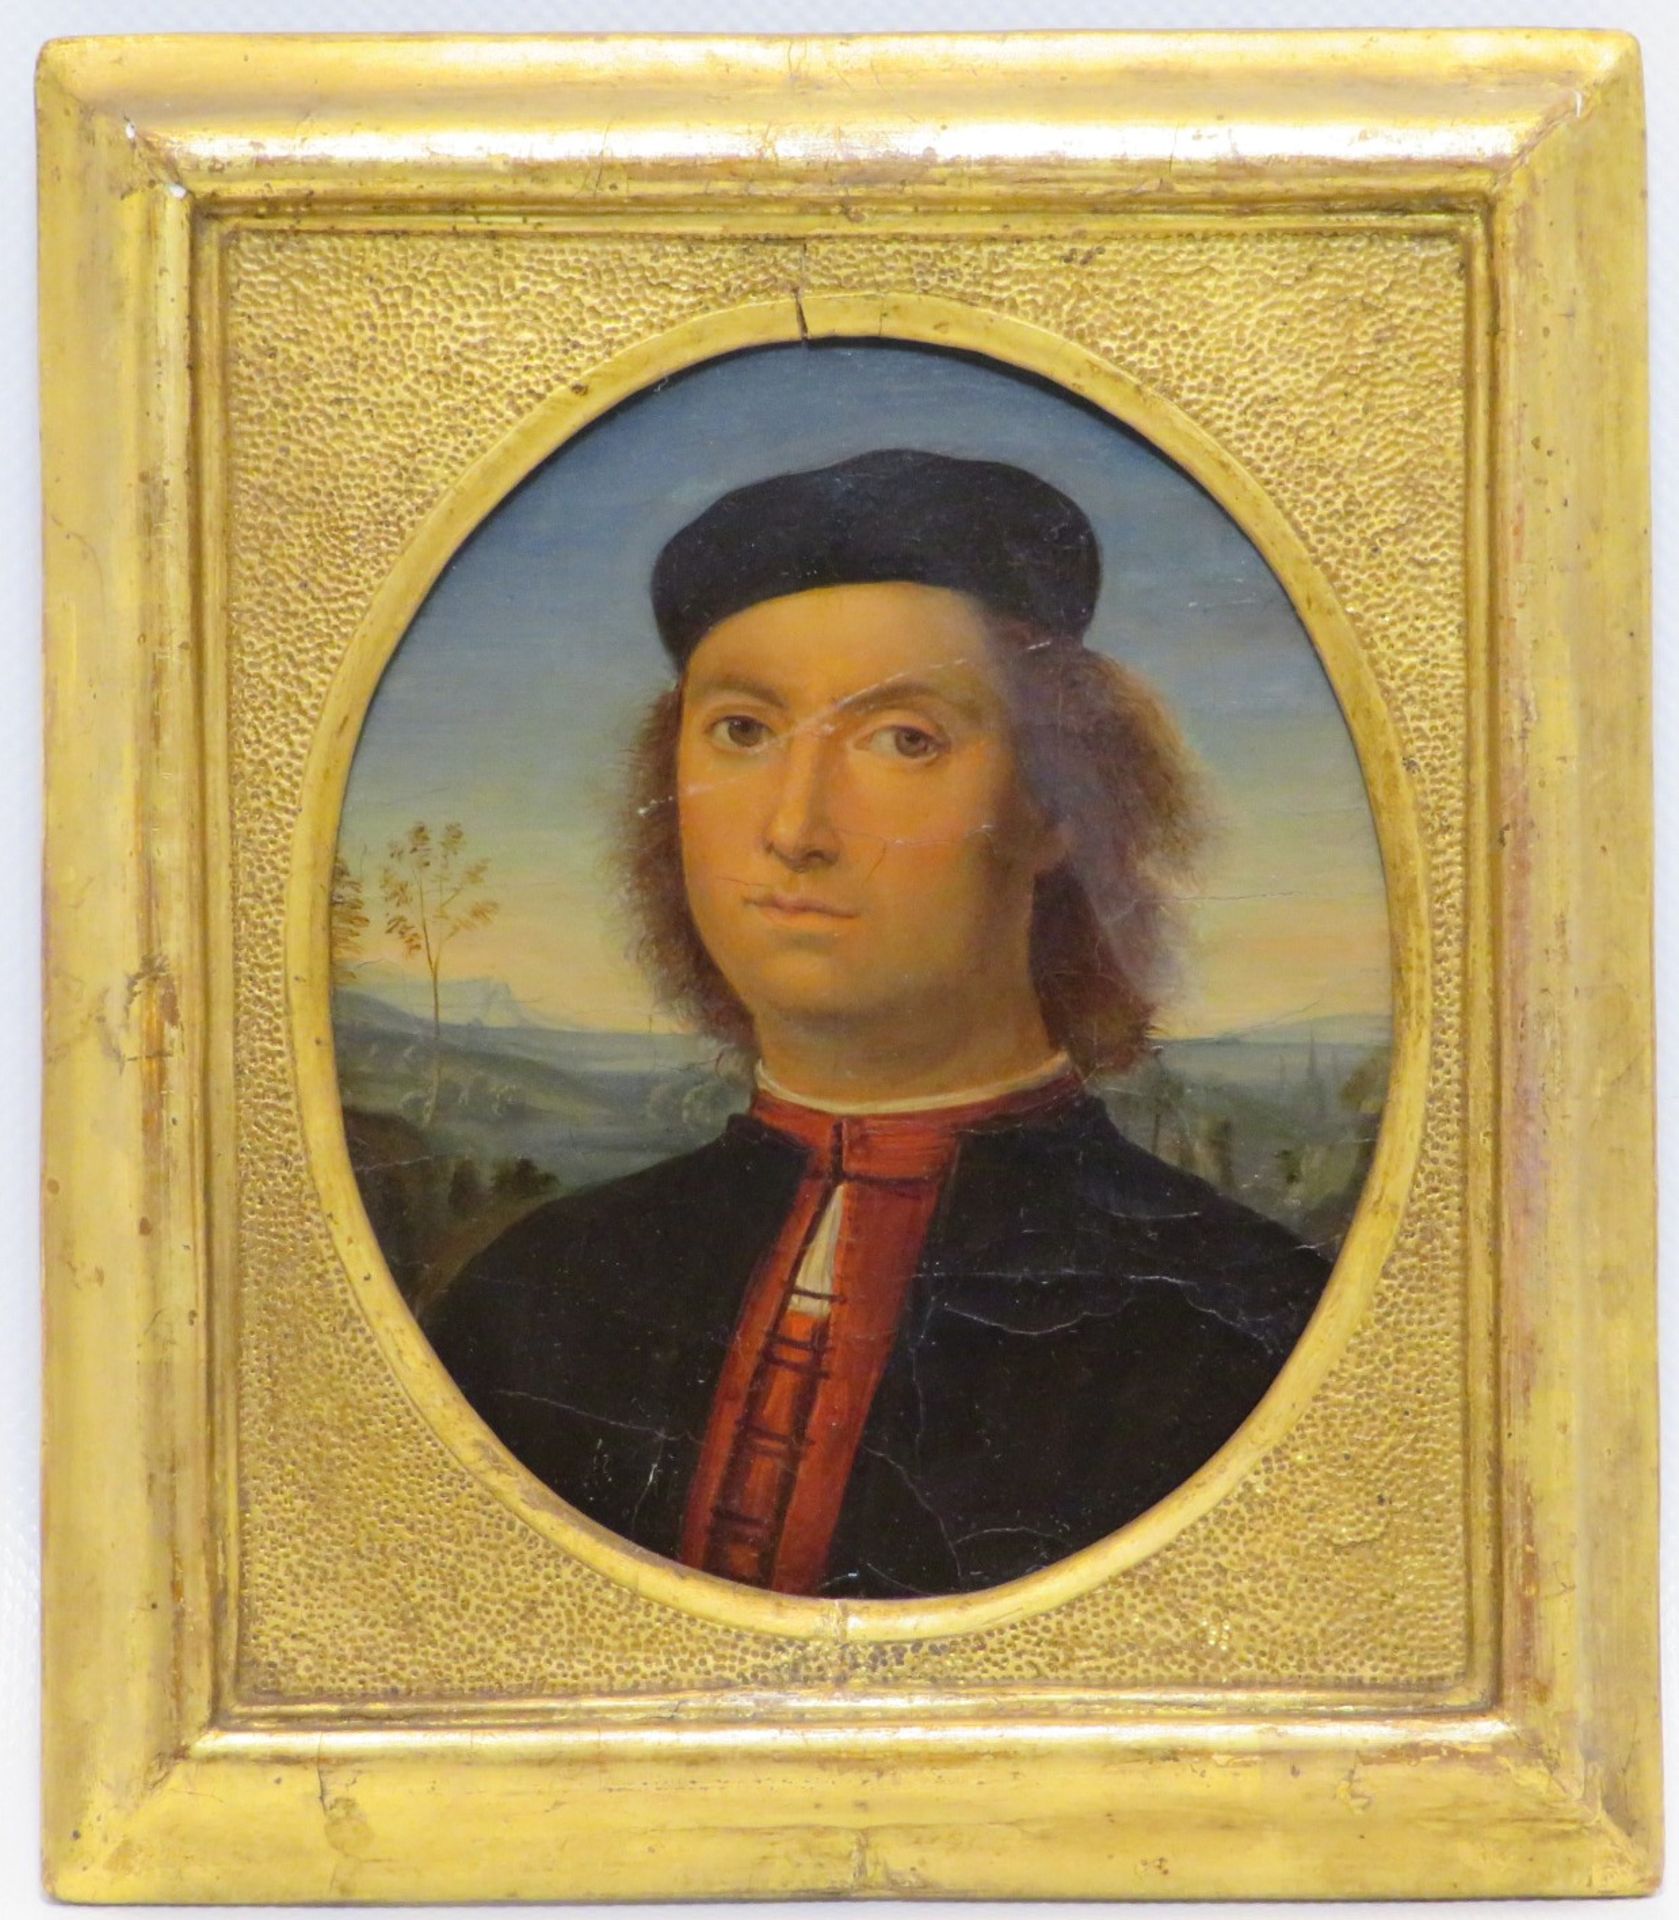 Nach Pietro Perugino (1448 - 1523), "Francesco delle Opere", 18./19. Jahrhundert.